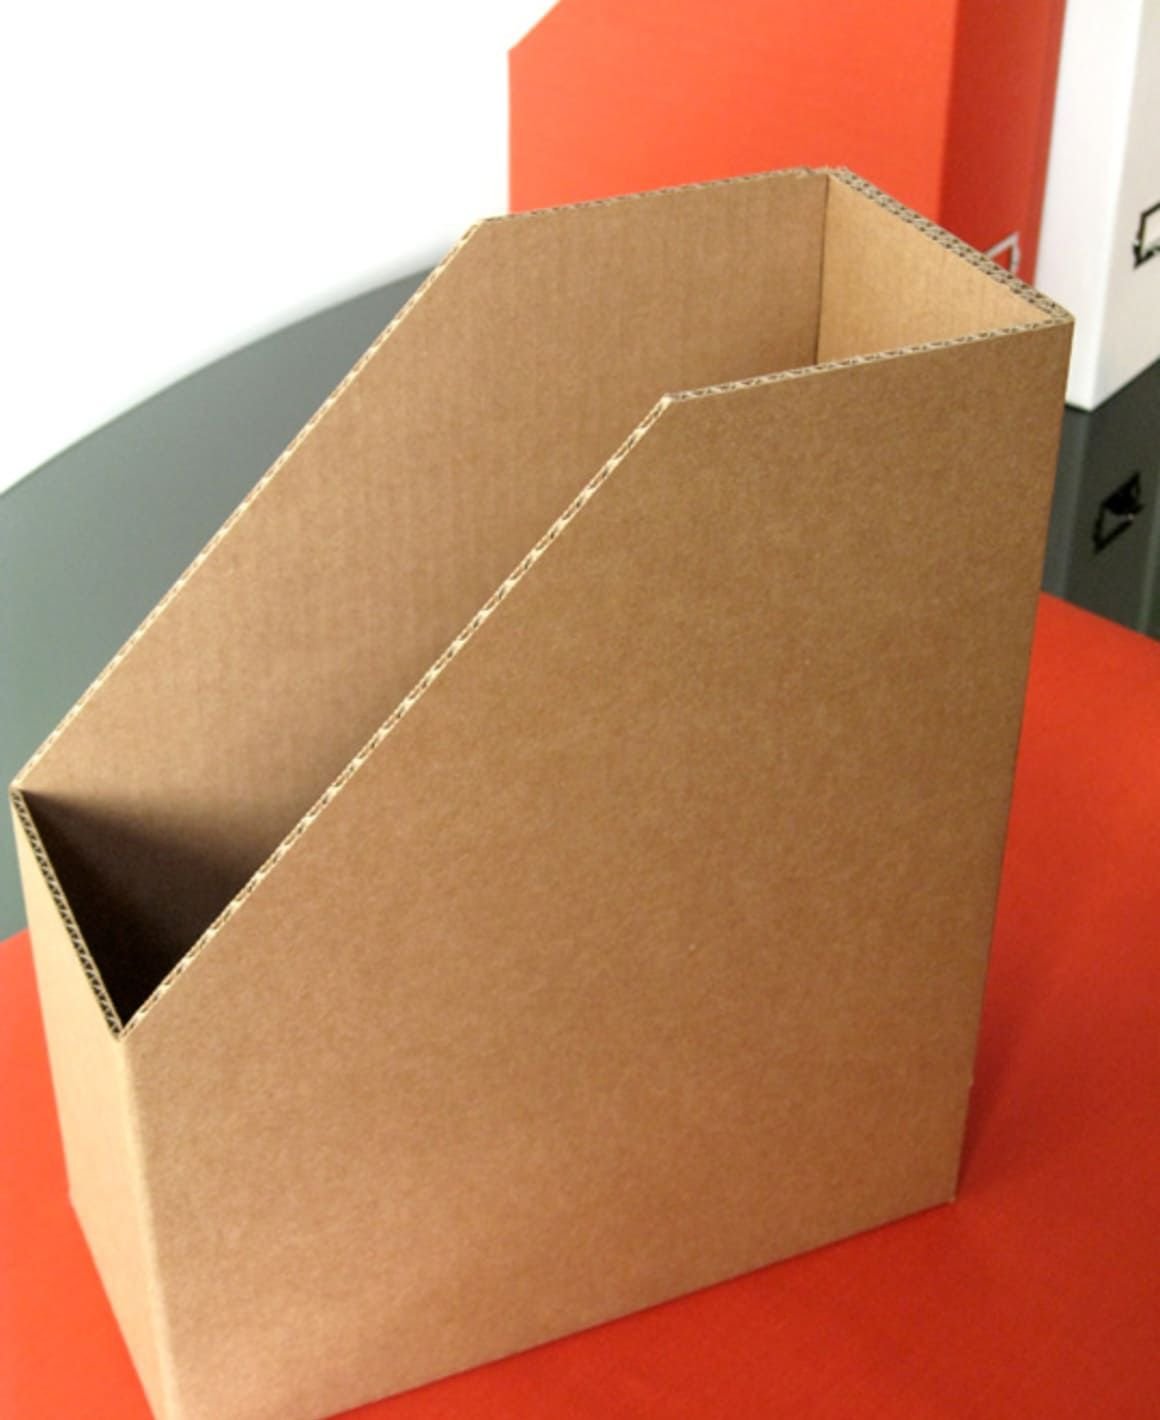 Под бумагу на стол. Органайзер для бумаг картонный. Кортонна подставка для папок. Органайзер для бумаг из картона. Картонная подставка для бумаг.